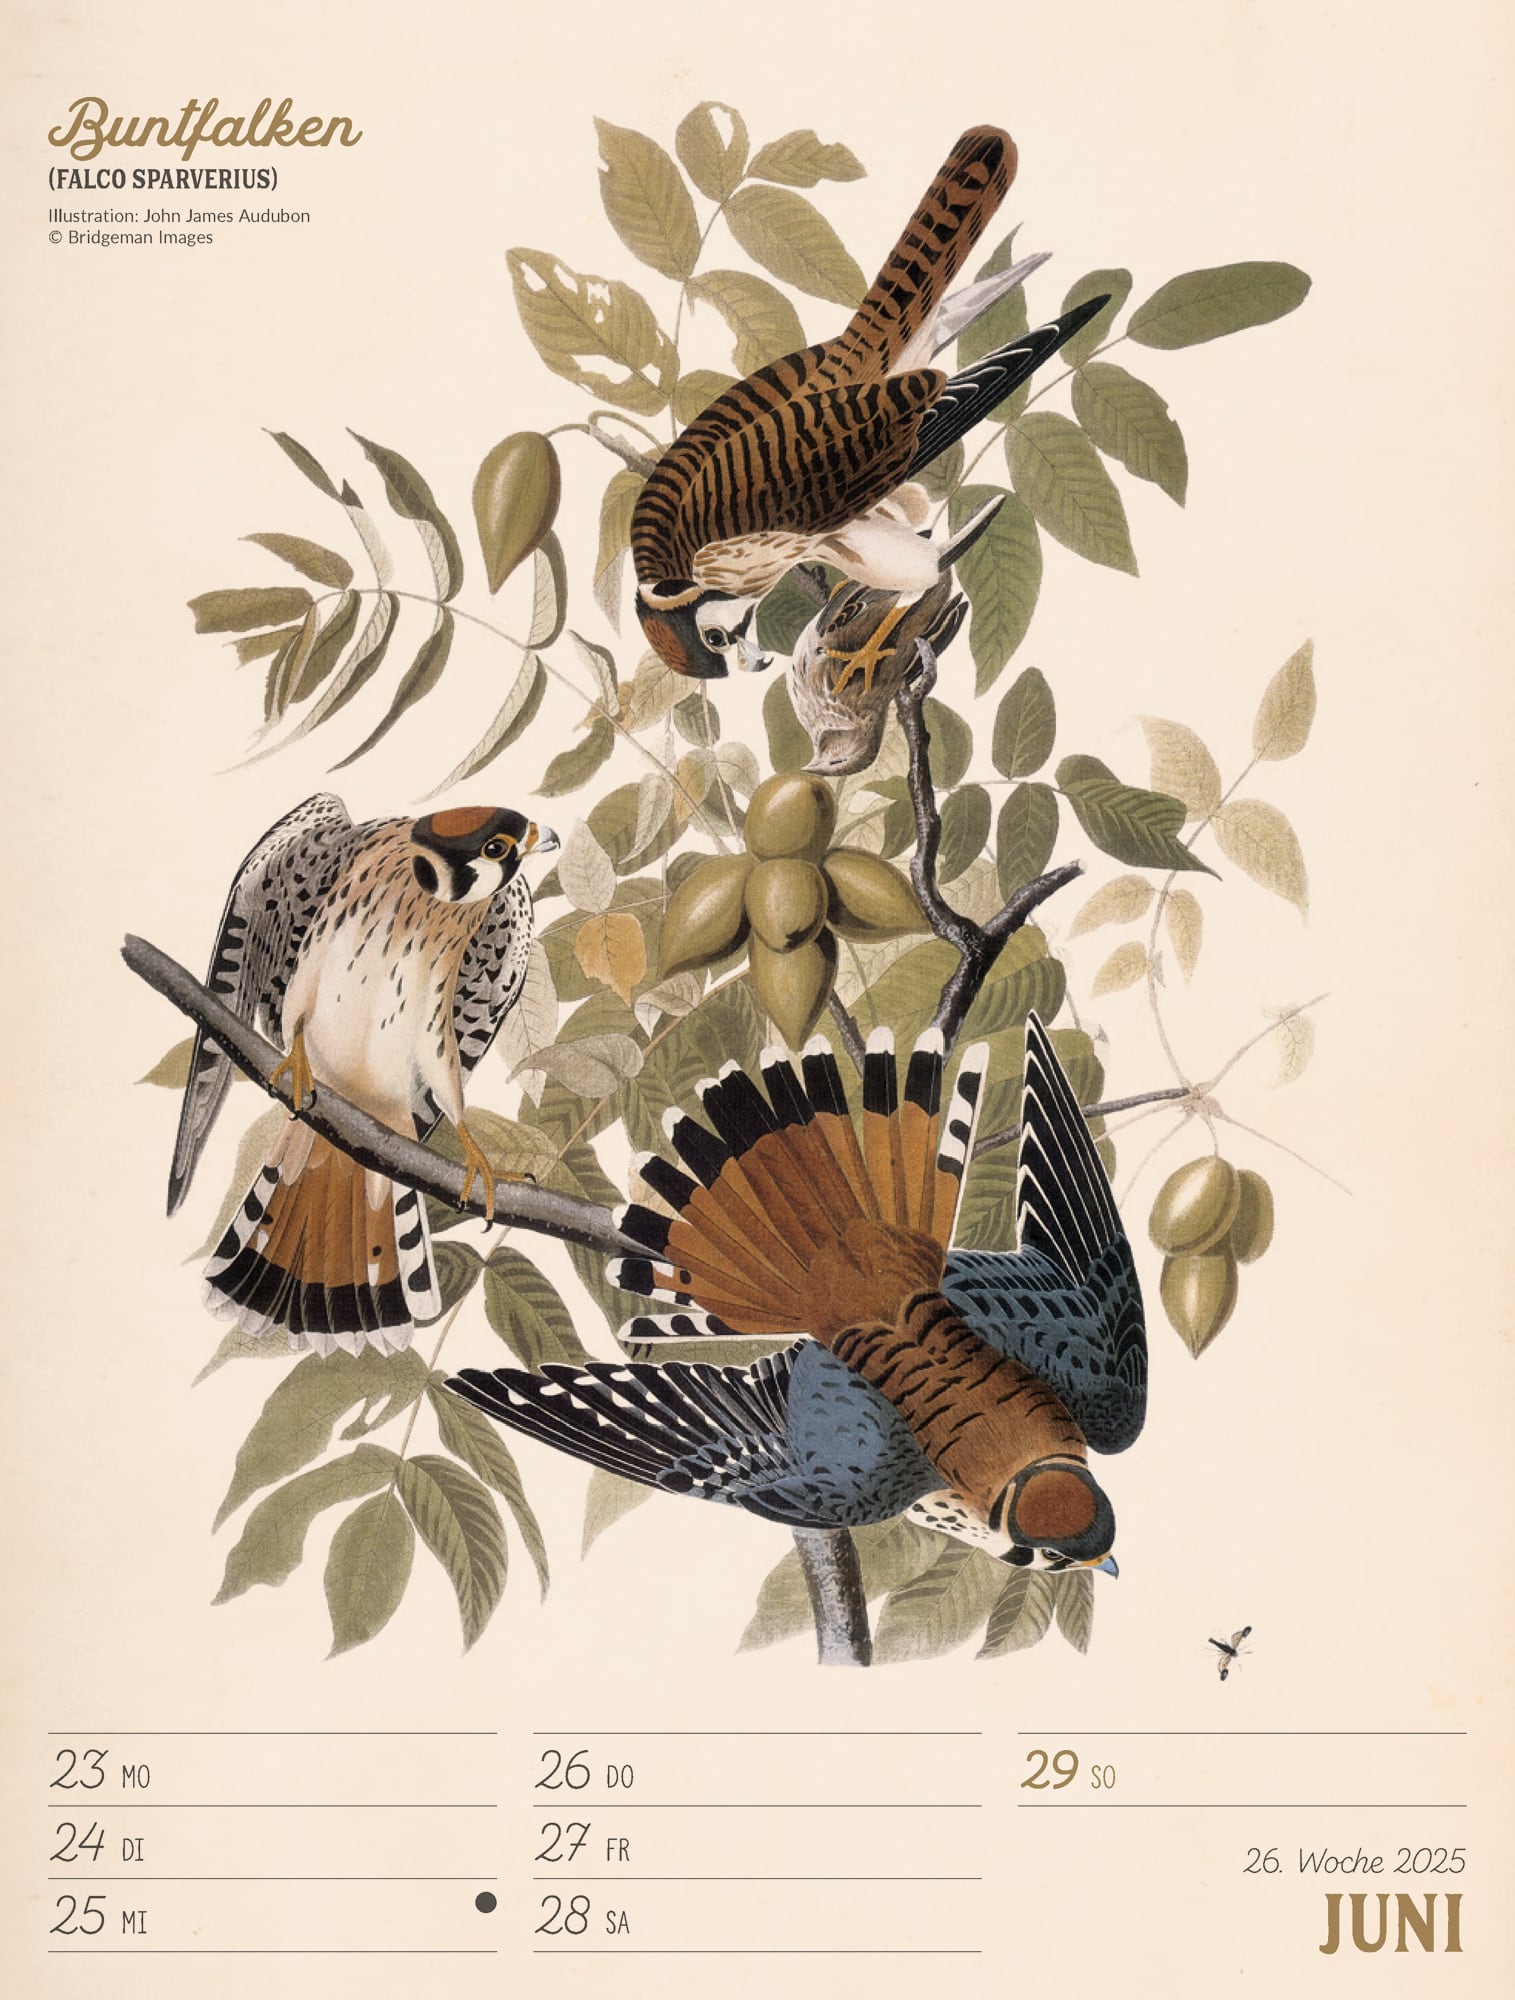 Ackermann Calendar The wonderful World of Birds 2025 - Weekly Planner - Inside View 29